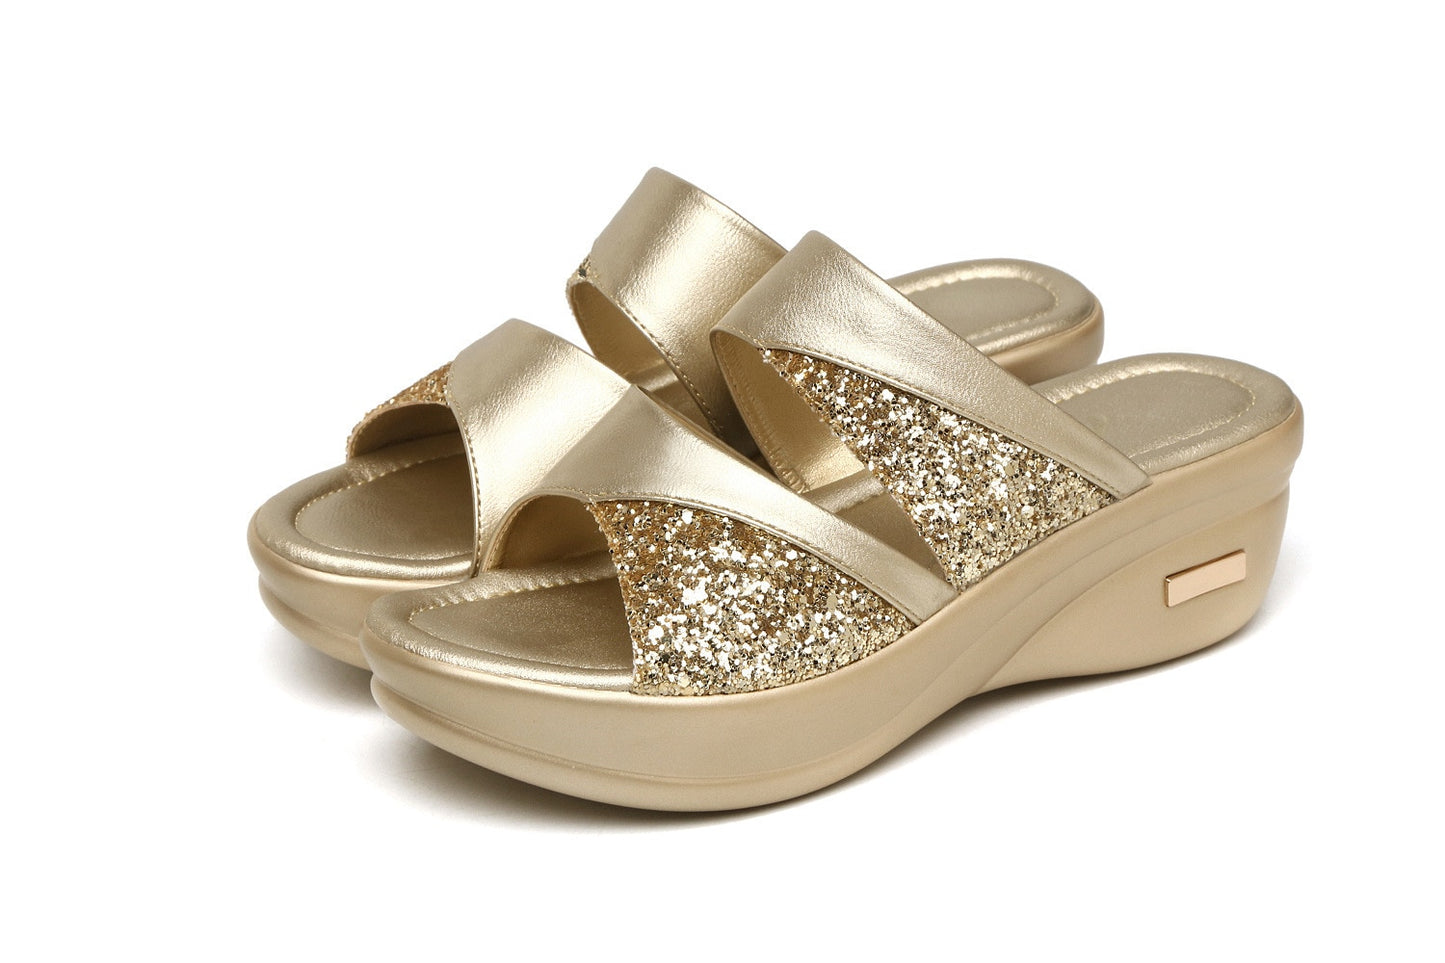 Sandals Woman Summer Gold Open Toe Sandal Dress Shoes Womens High Heels Sandals Platform Wedges Heeled Pumps Ladies Shoes